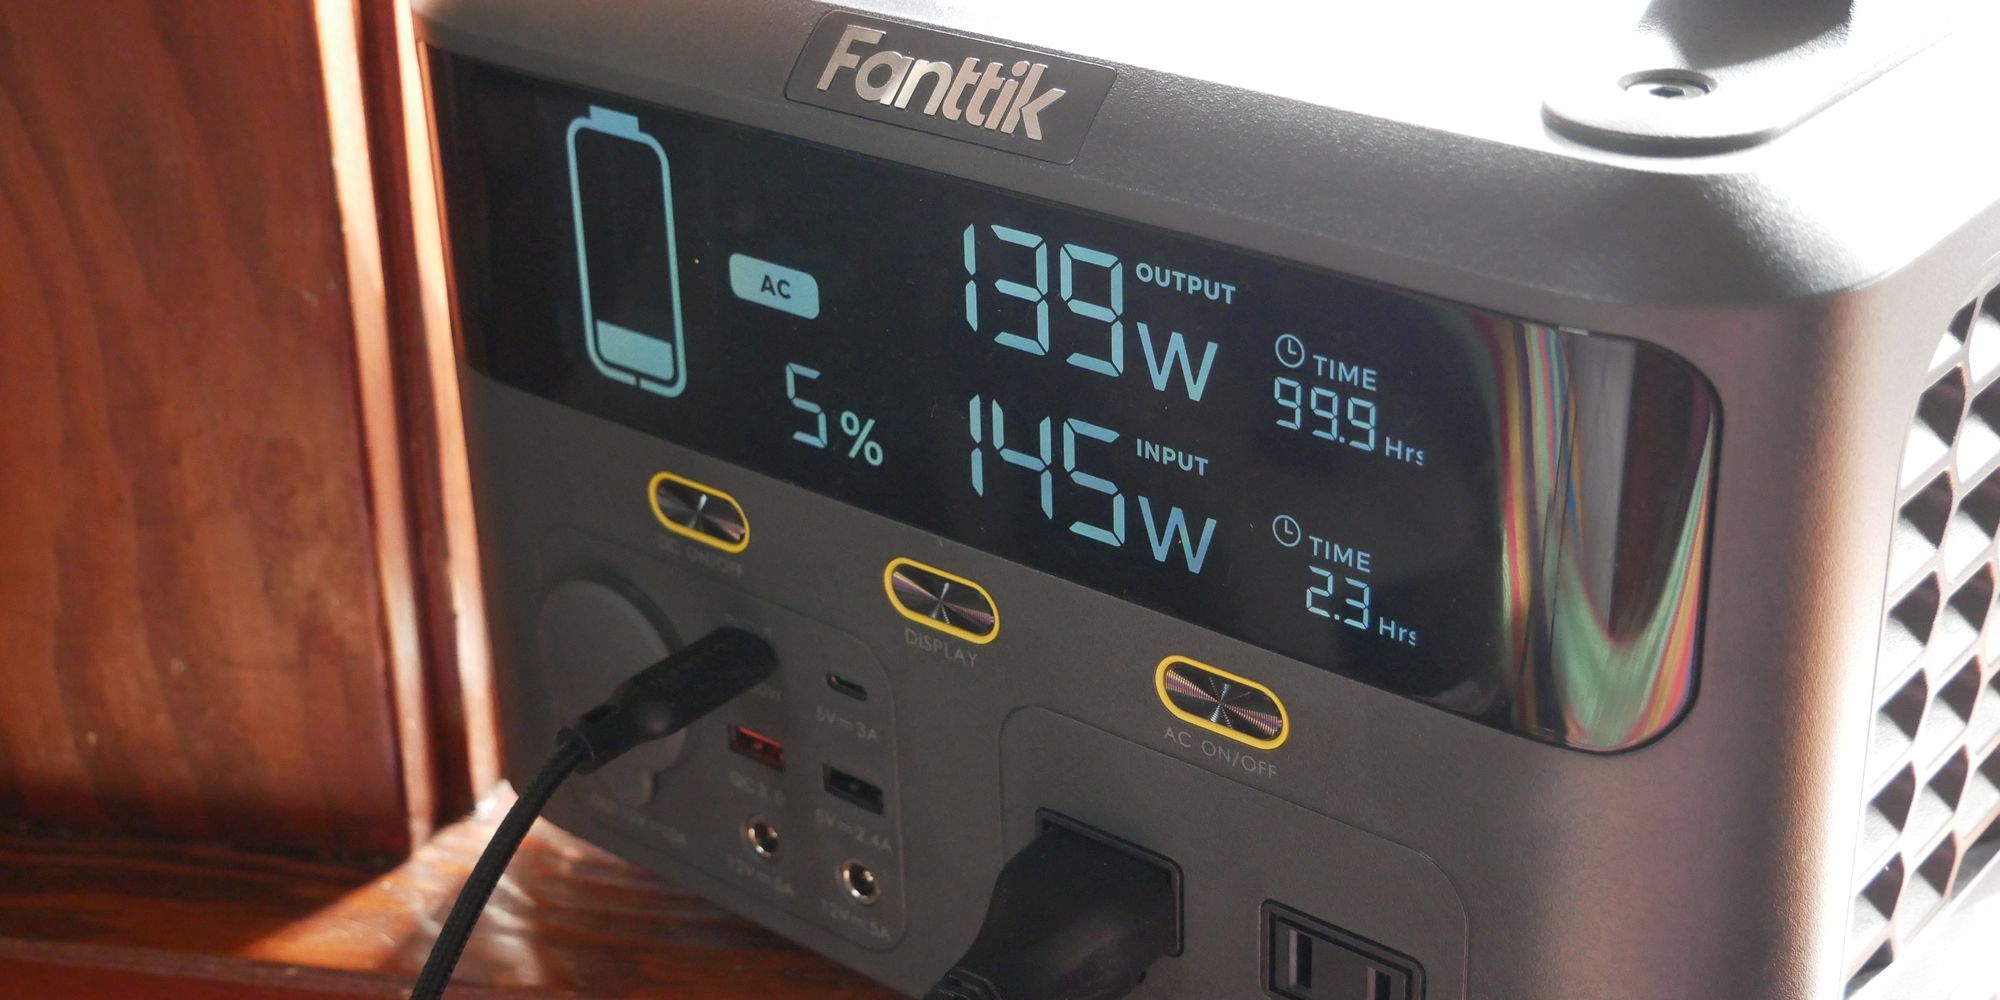 Fanttik EVO 300 Power Station and Solar Panel Input Output Display